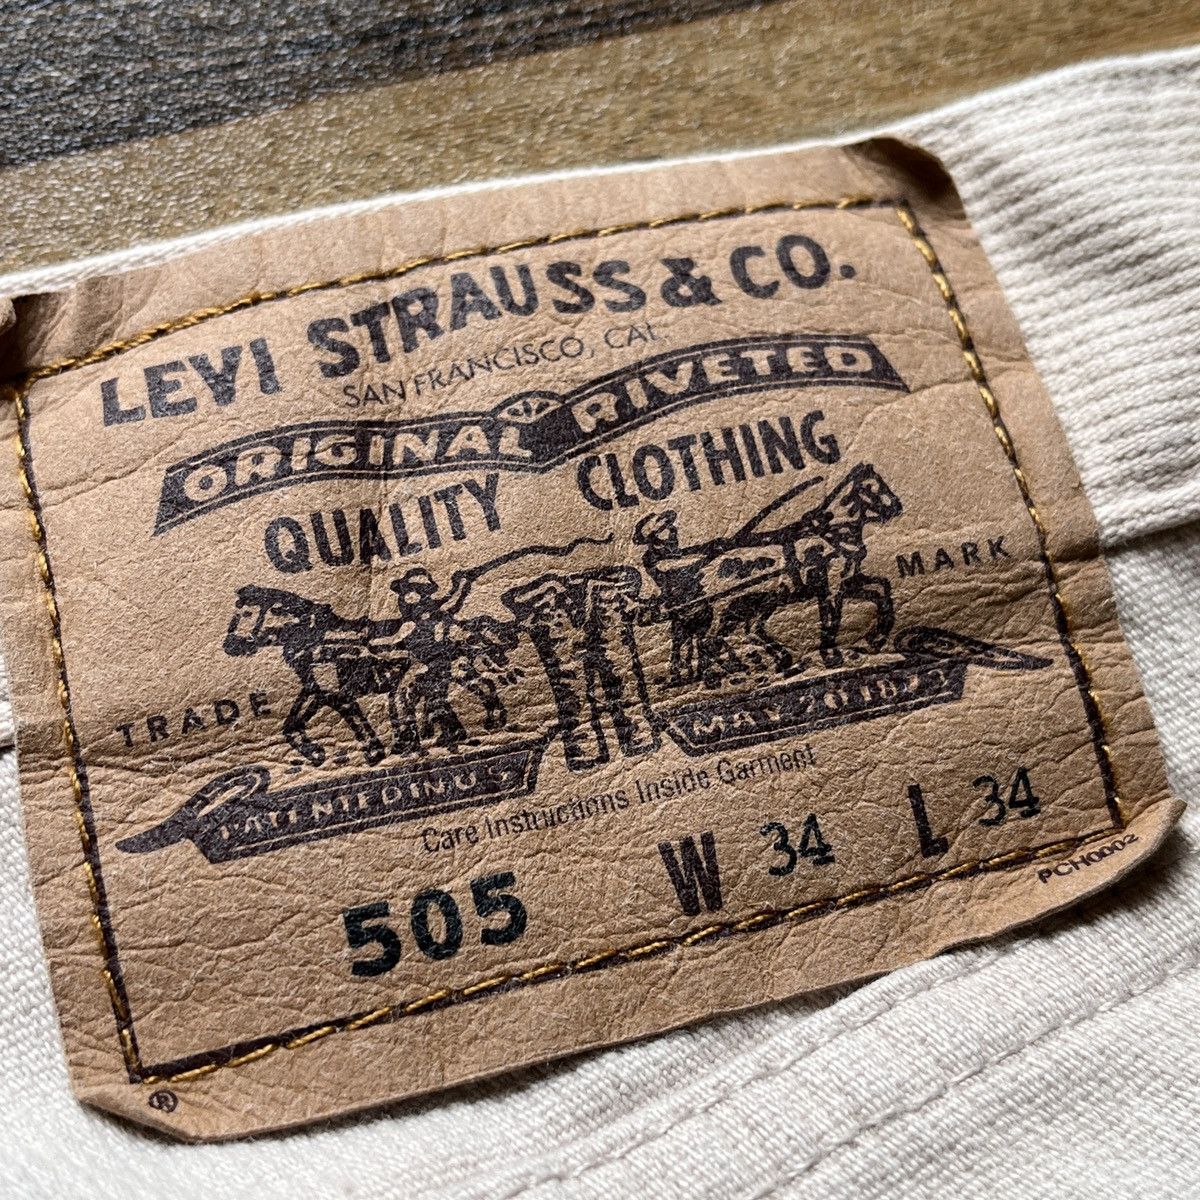 Levi's 505 Vintage Clothing Denim Distressed Ripped - 14